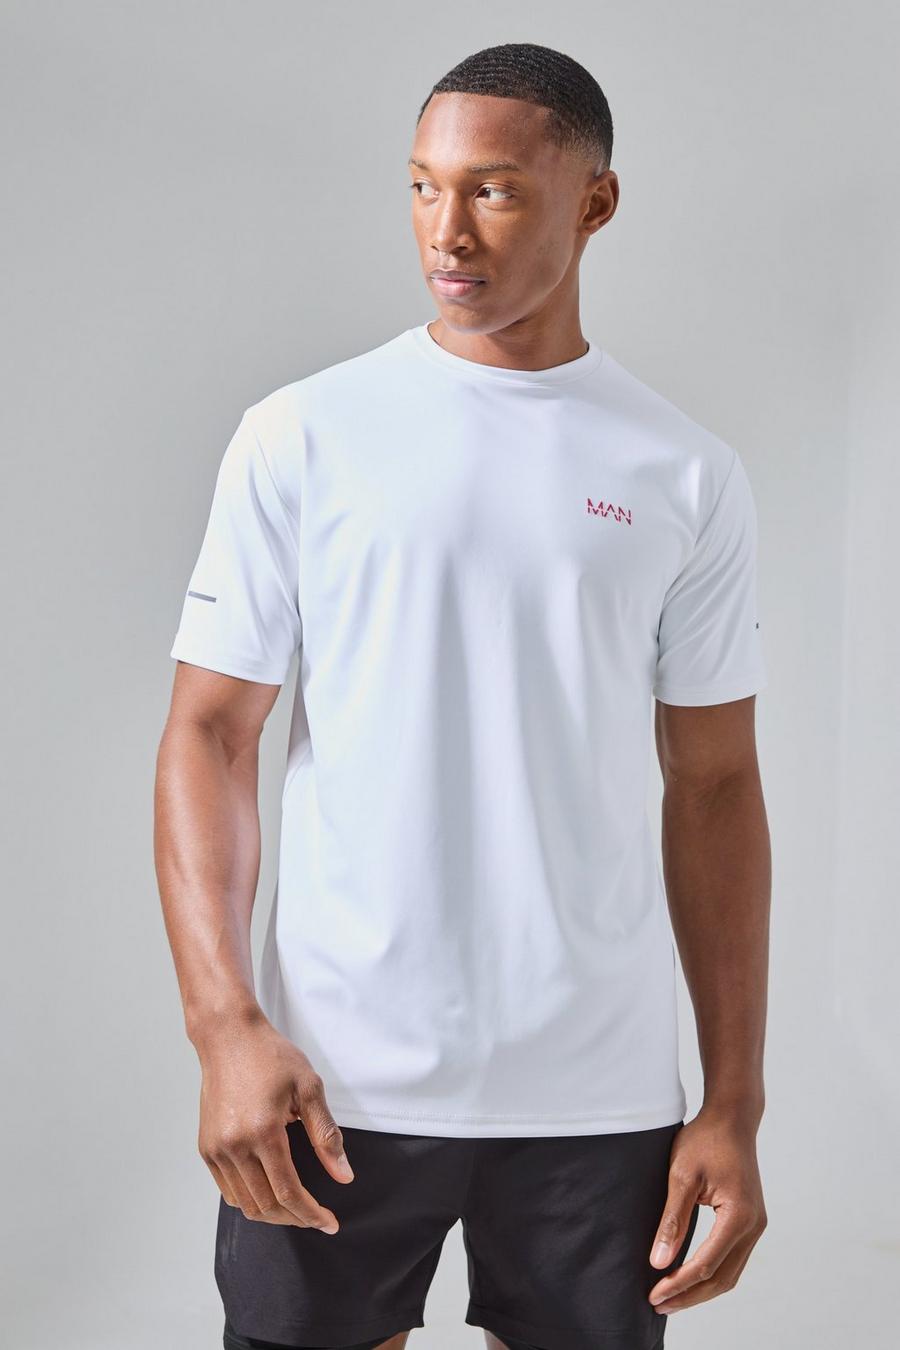 Man Active Performance T-Shirt, White